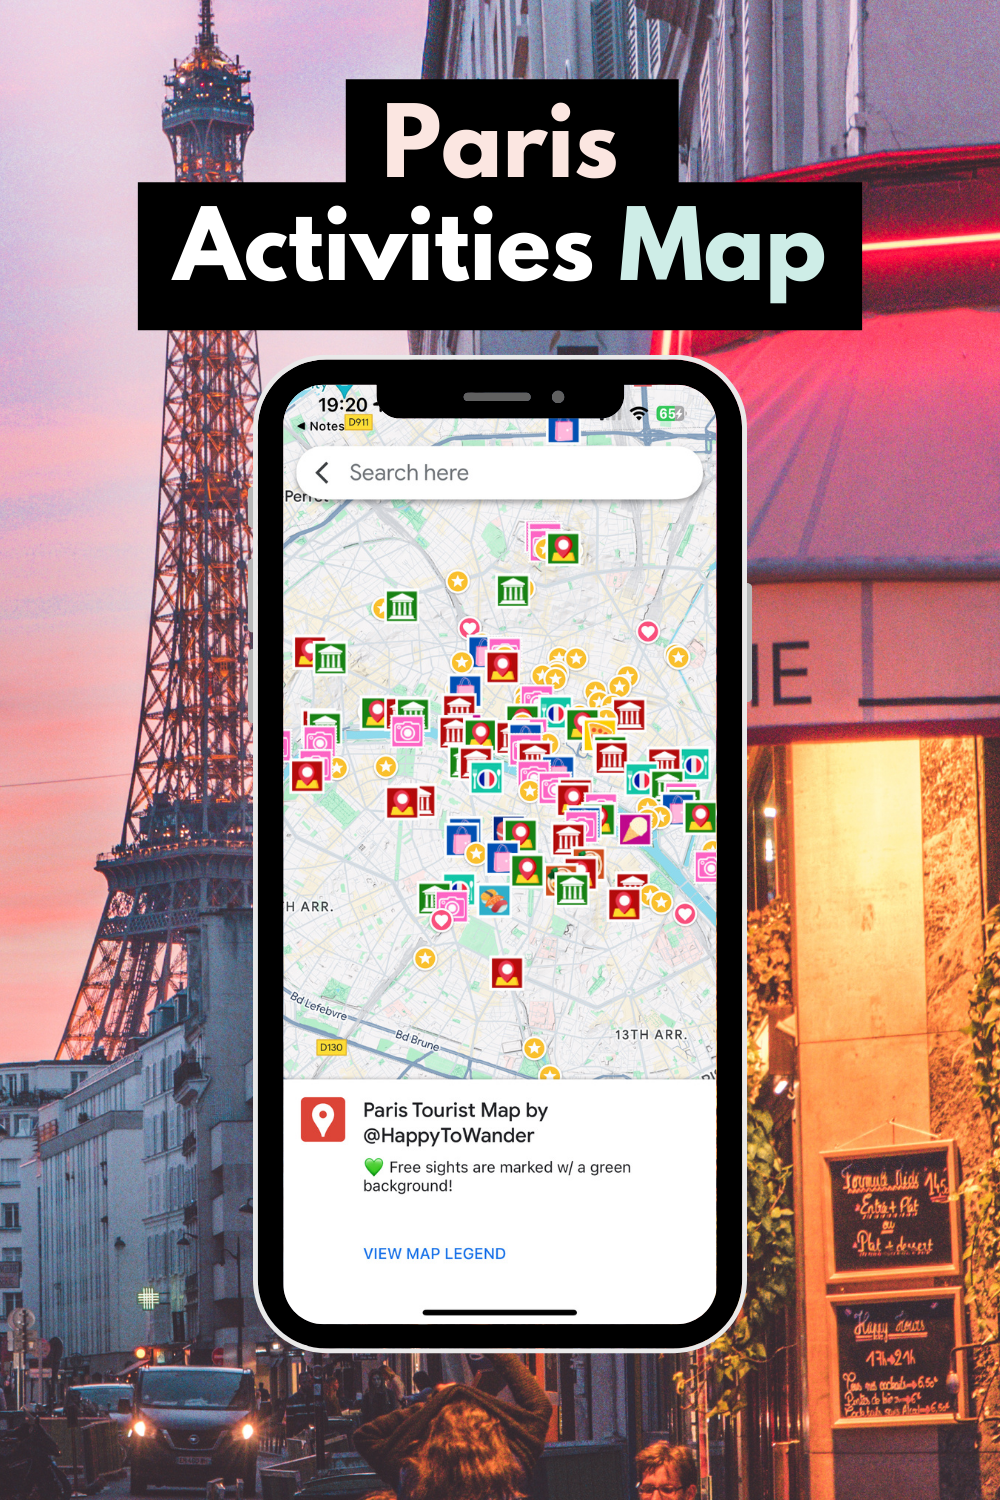 paris map showing tourist attractions